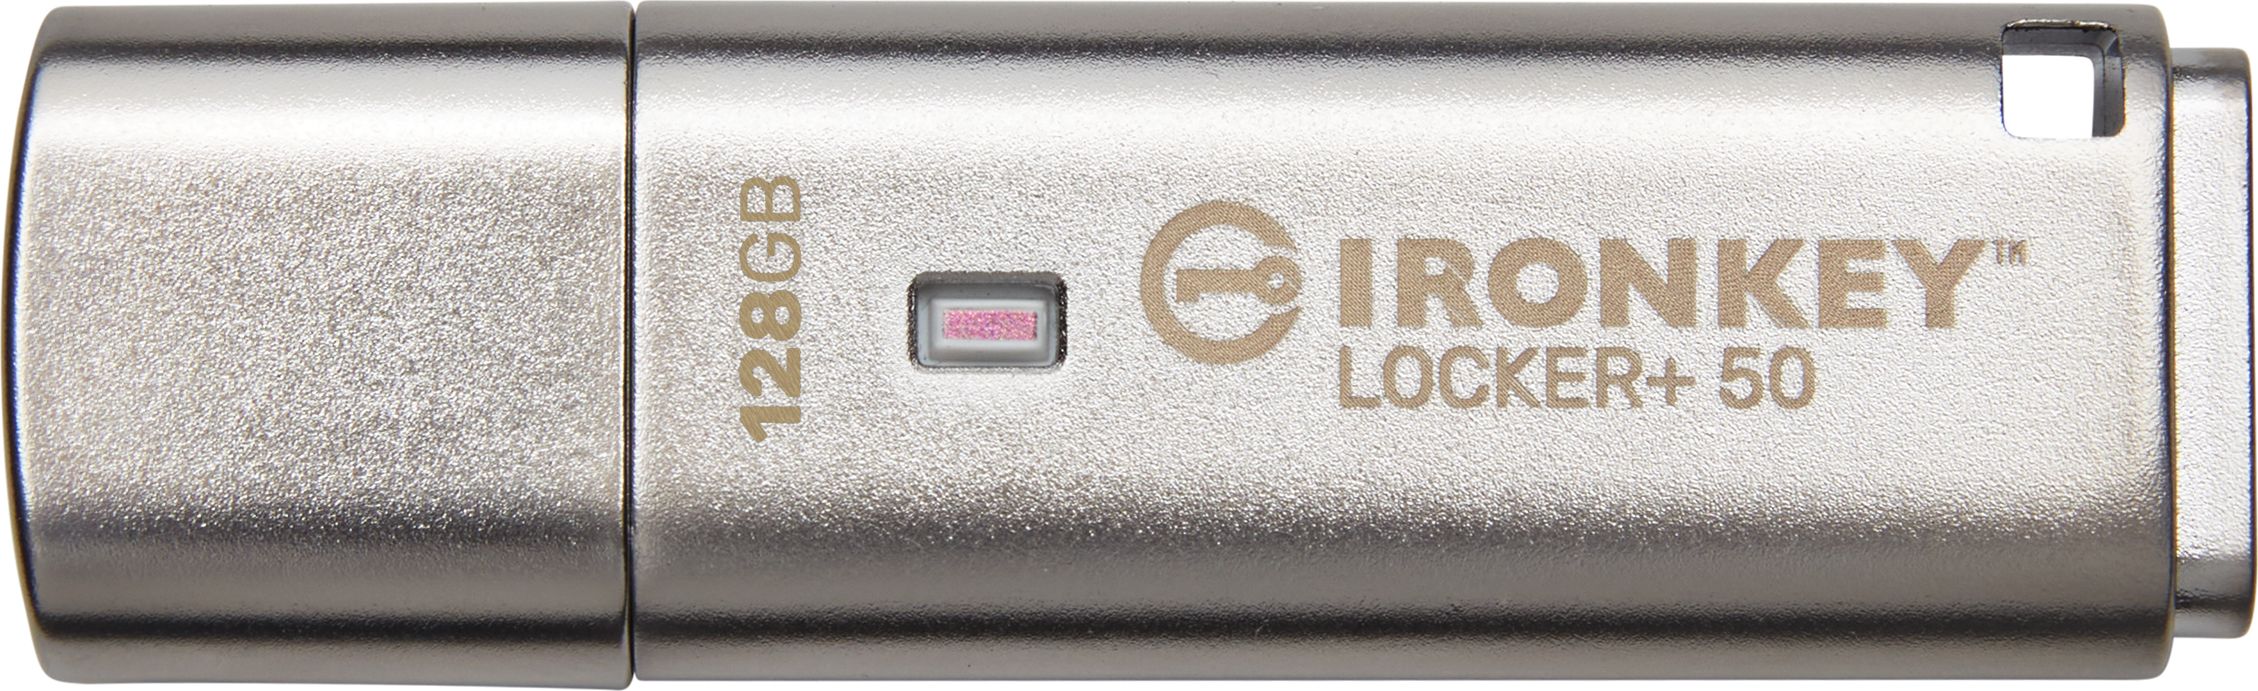 Kingston IronKey Locker+ 50, unitate flash de 128 GB (IKLP50/128 GB)